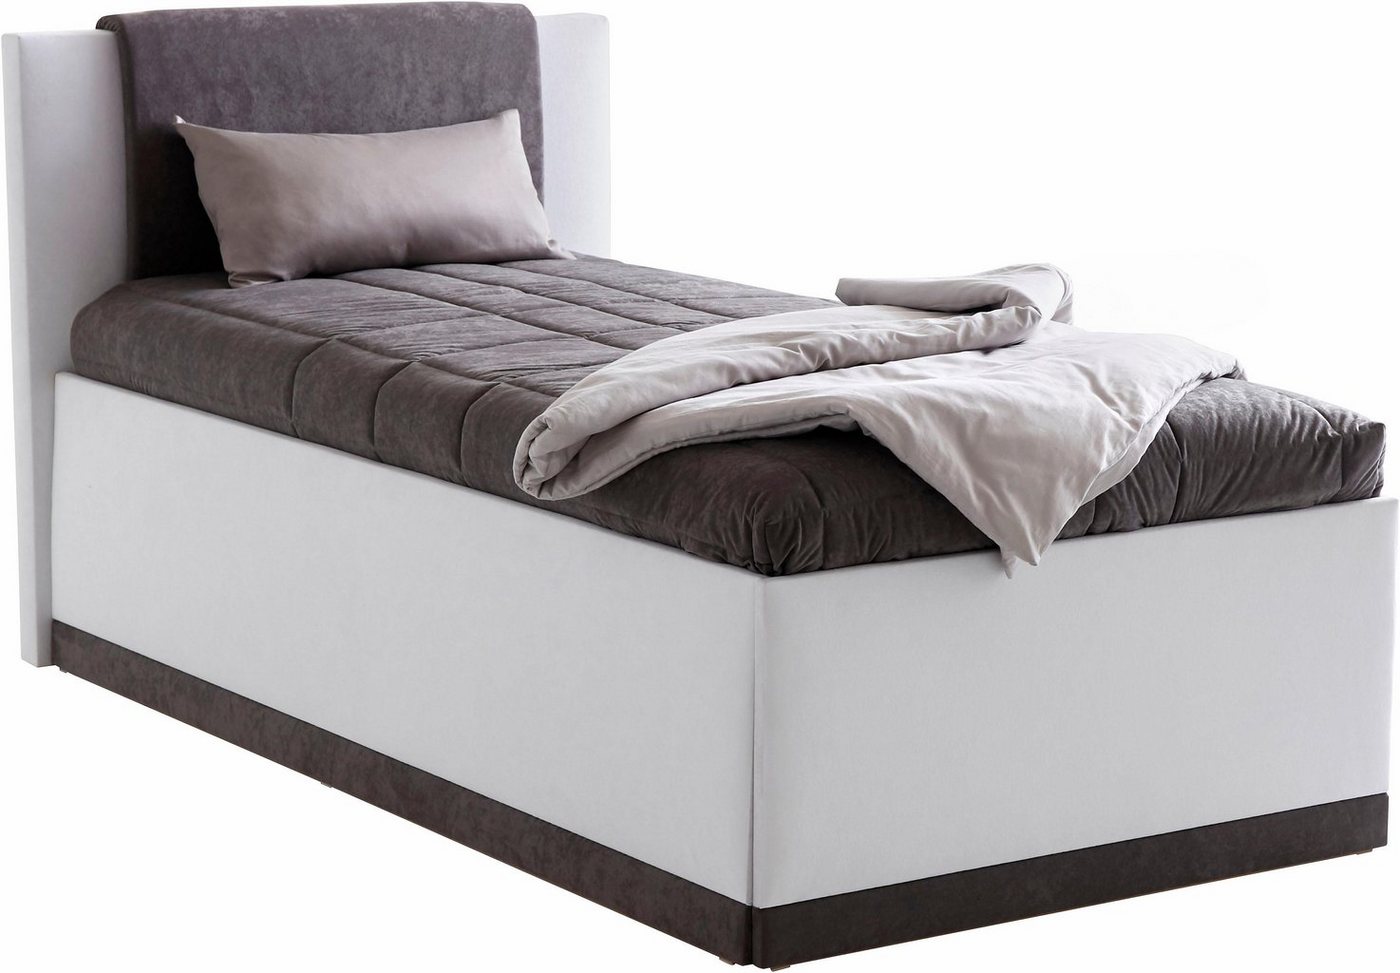 Westfalia Schlafkomfort Polsterbett, mit Bettkasten und Tagesdecke von Westfalia Schlafkomfort